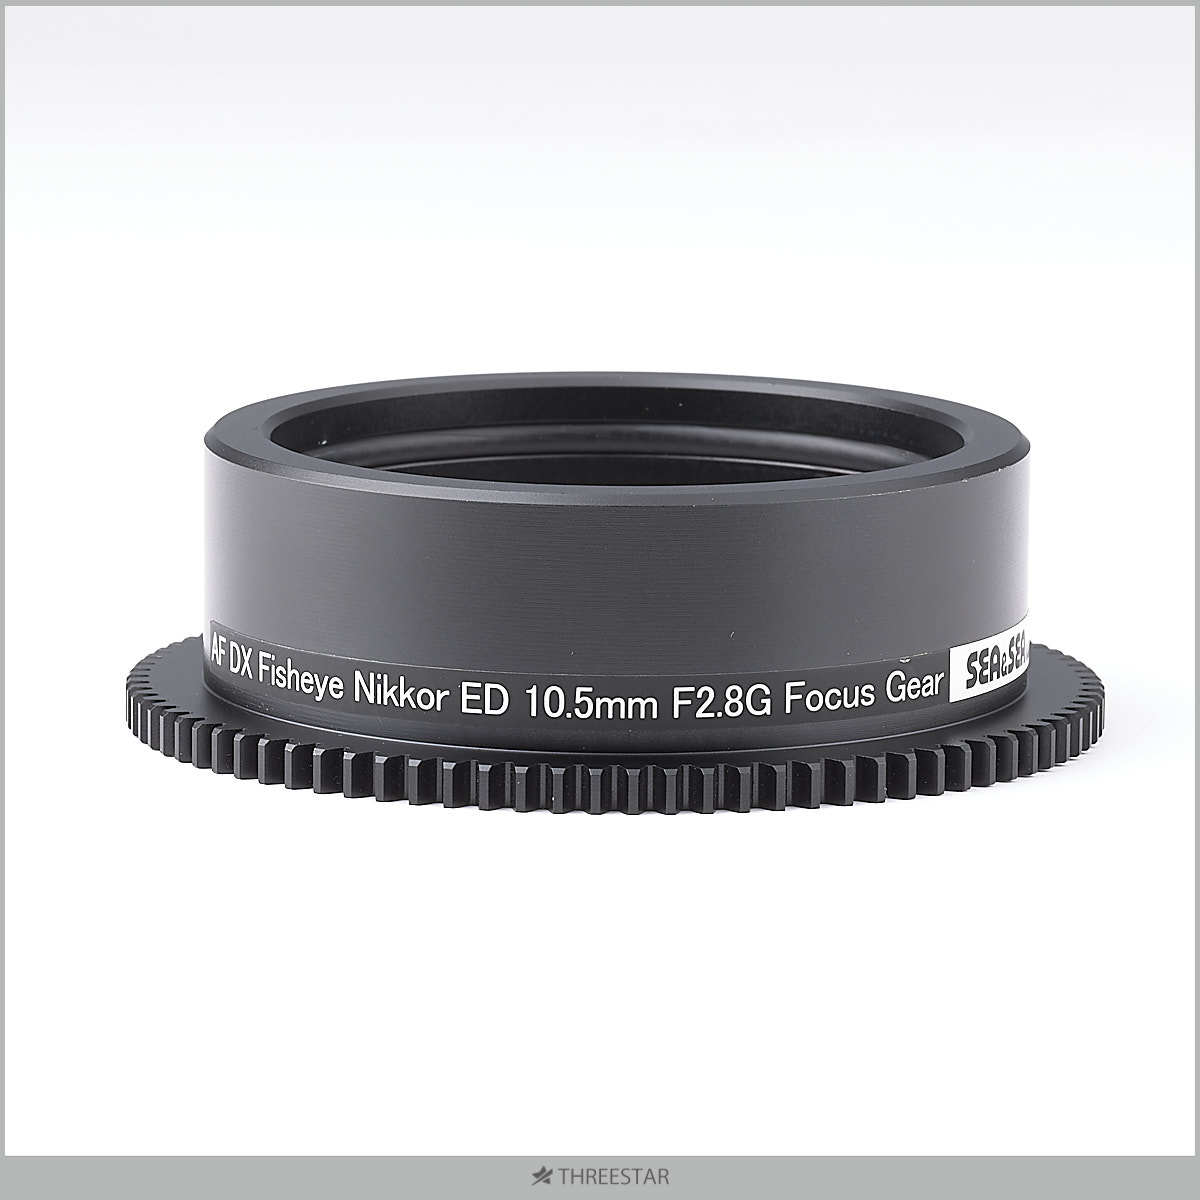 SEA＆SEA シーアンドシー Nikon AF DX Fisheye-Nikkor ED 10.5mm F2.8G用 フォーカスギア